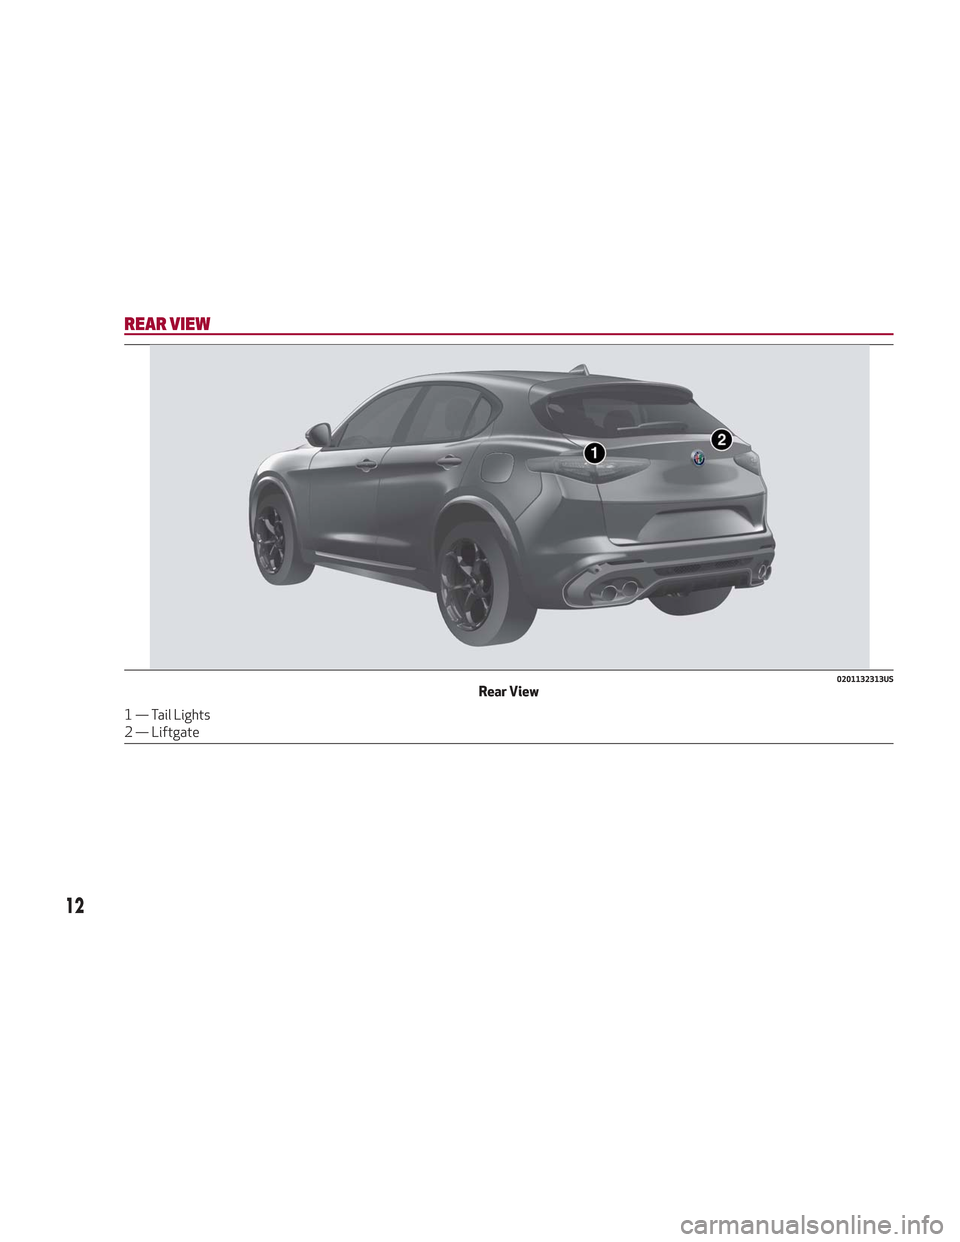 Alfa Romeo Stelvio 2018  Owners Manual REAR VIEW
0201132313USRear View
1 — Tail Lights
2 — Liftgate
12 